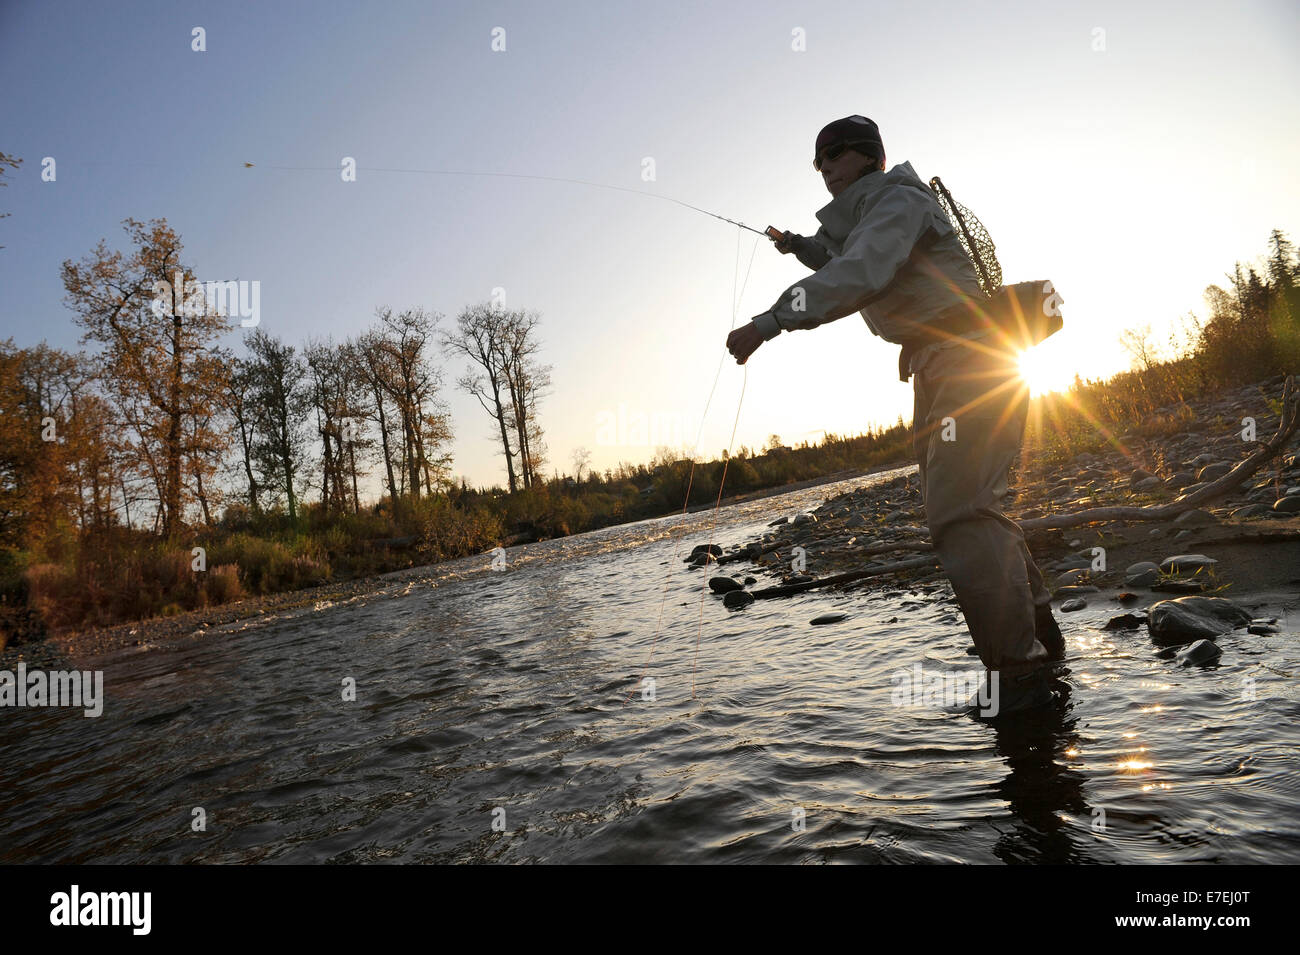 Pesca con mosca en alaska fotografías e imágenes de alta resolución - Alamy